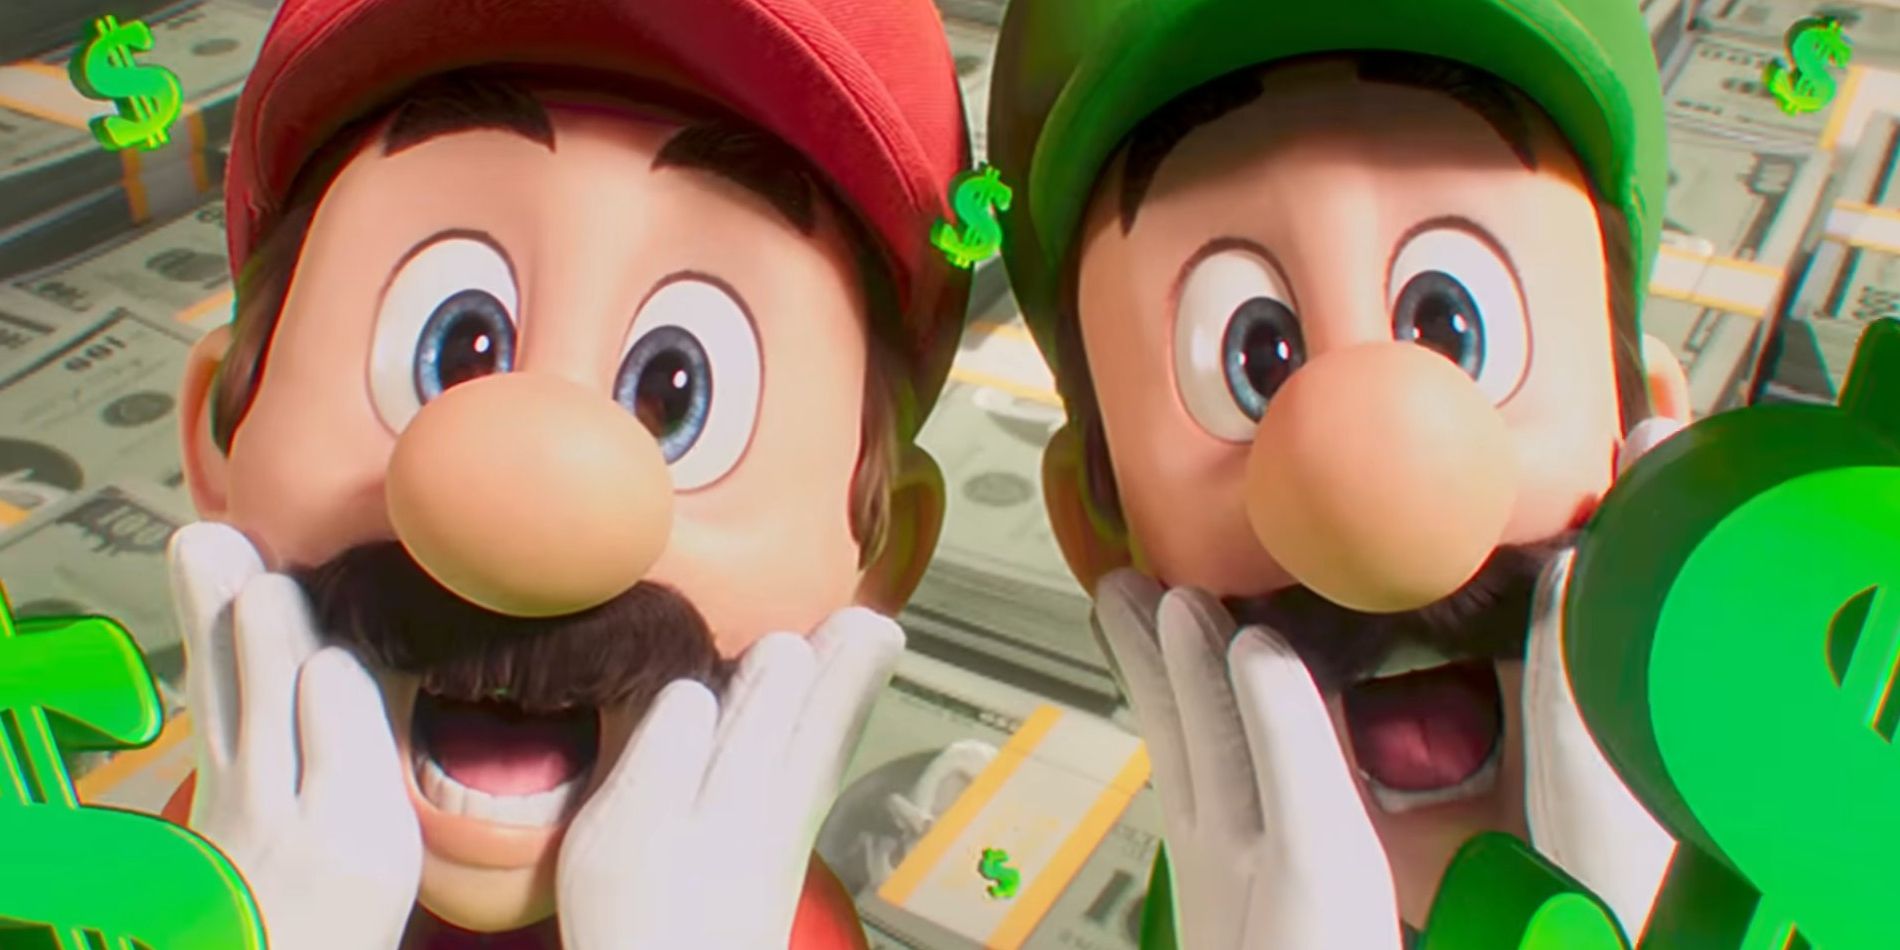 Super Mario Bros. Surpasses Frozen as the Second Biggest Animated Movie Ever